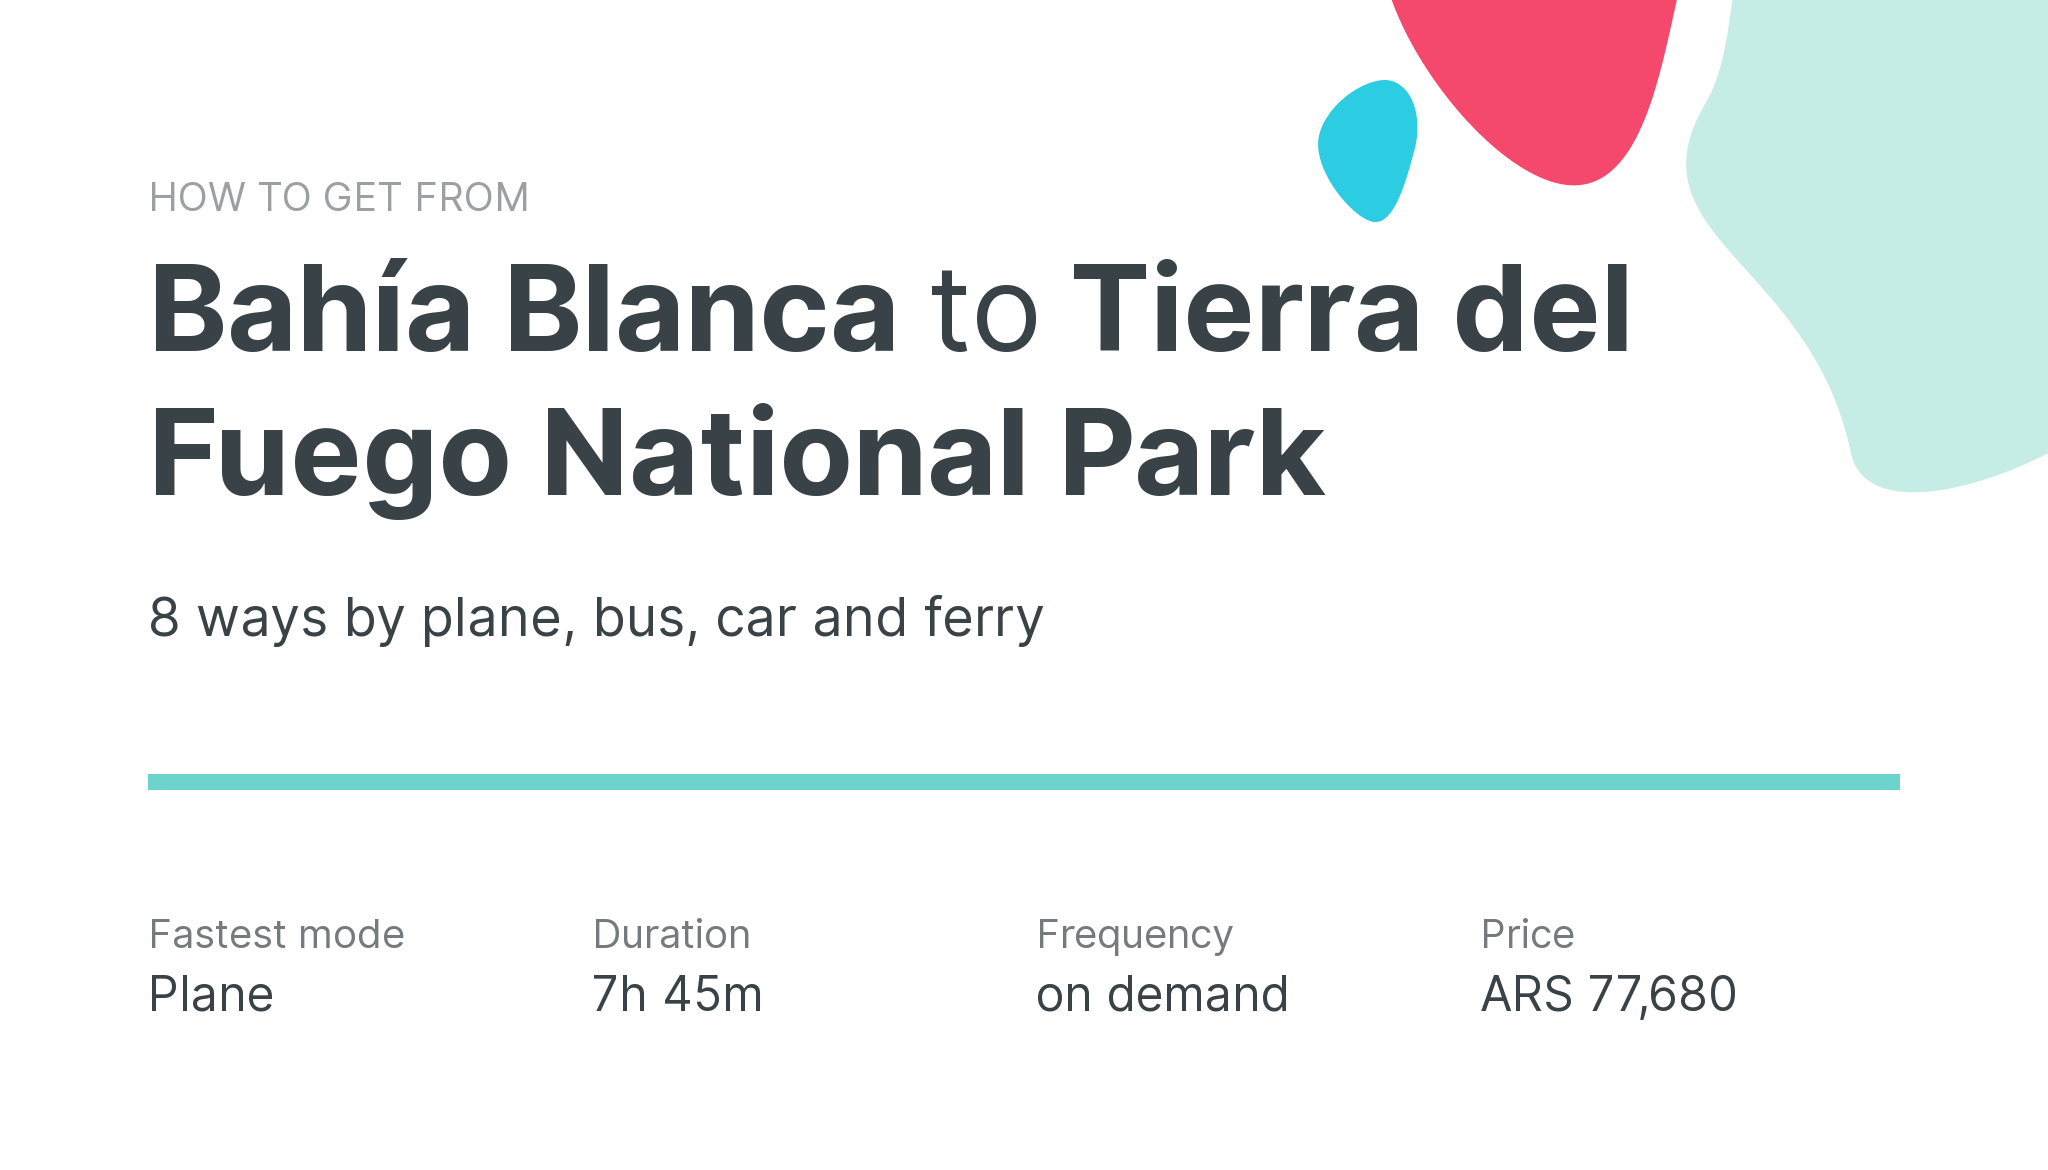 How do I get from Bahía Blanca to Tierra del Fuego National Park